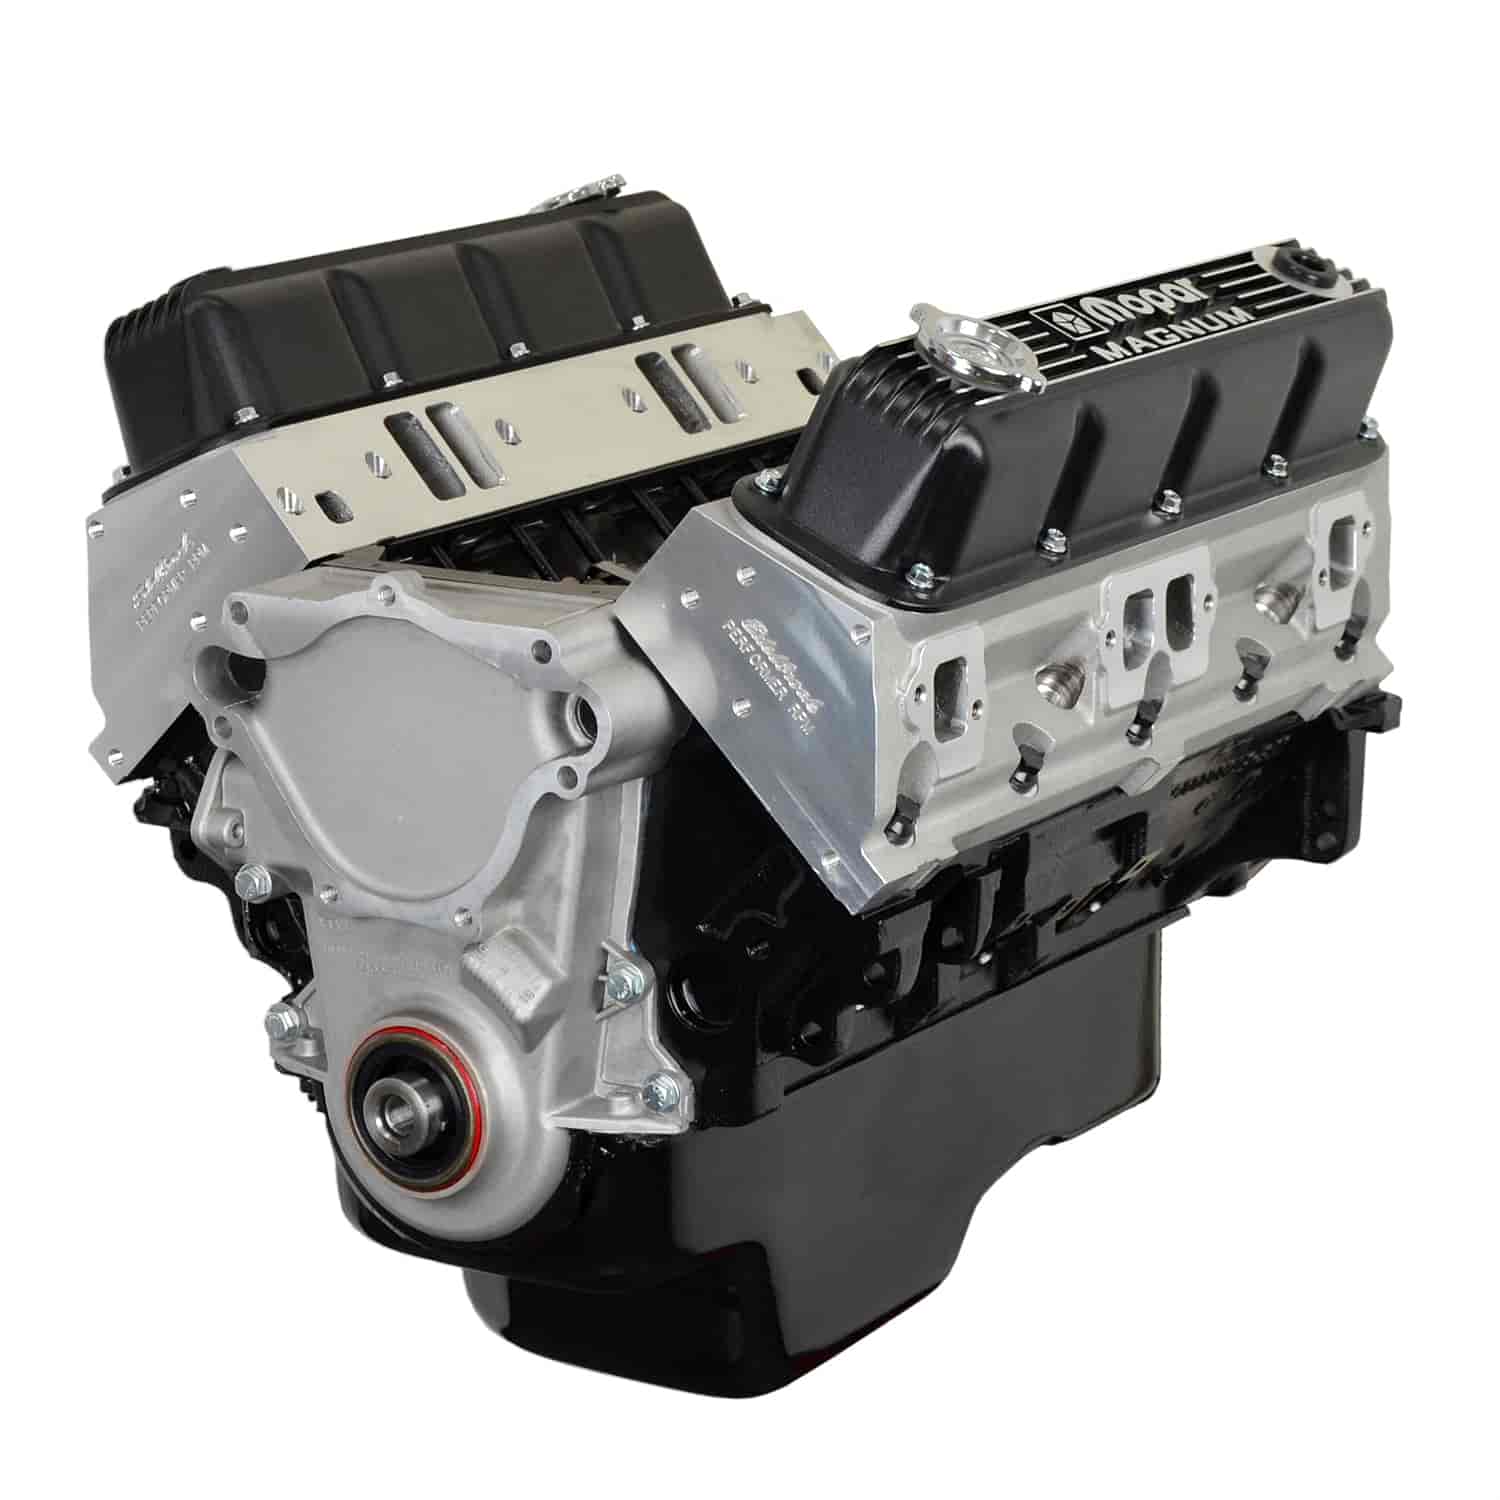 High Performance Crate Engine Small Block Chrysler 408ci / 465HP / 535TQ